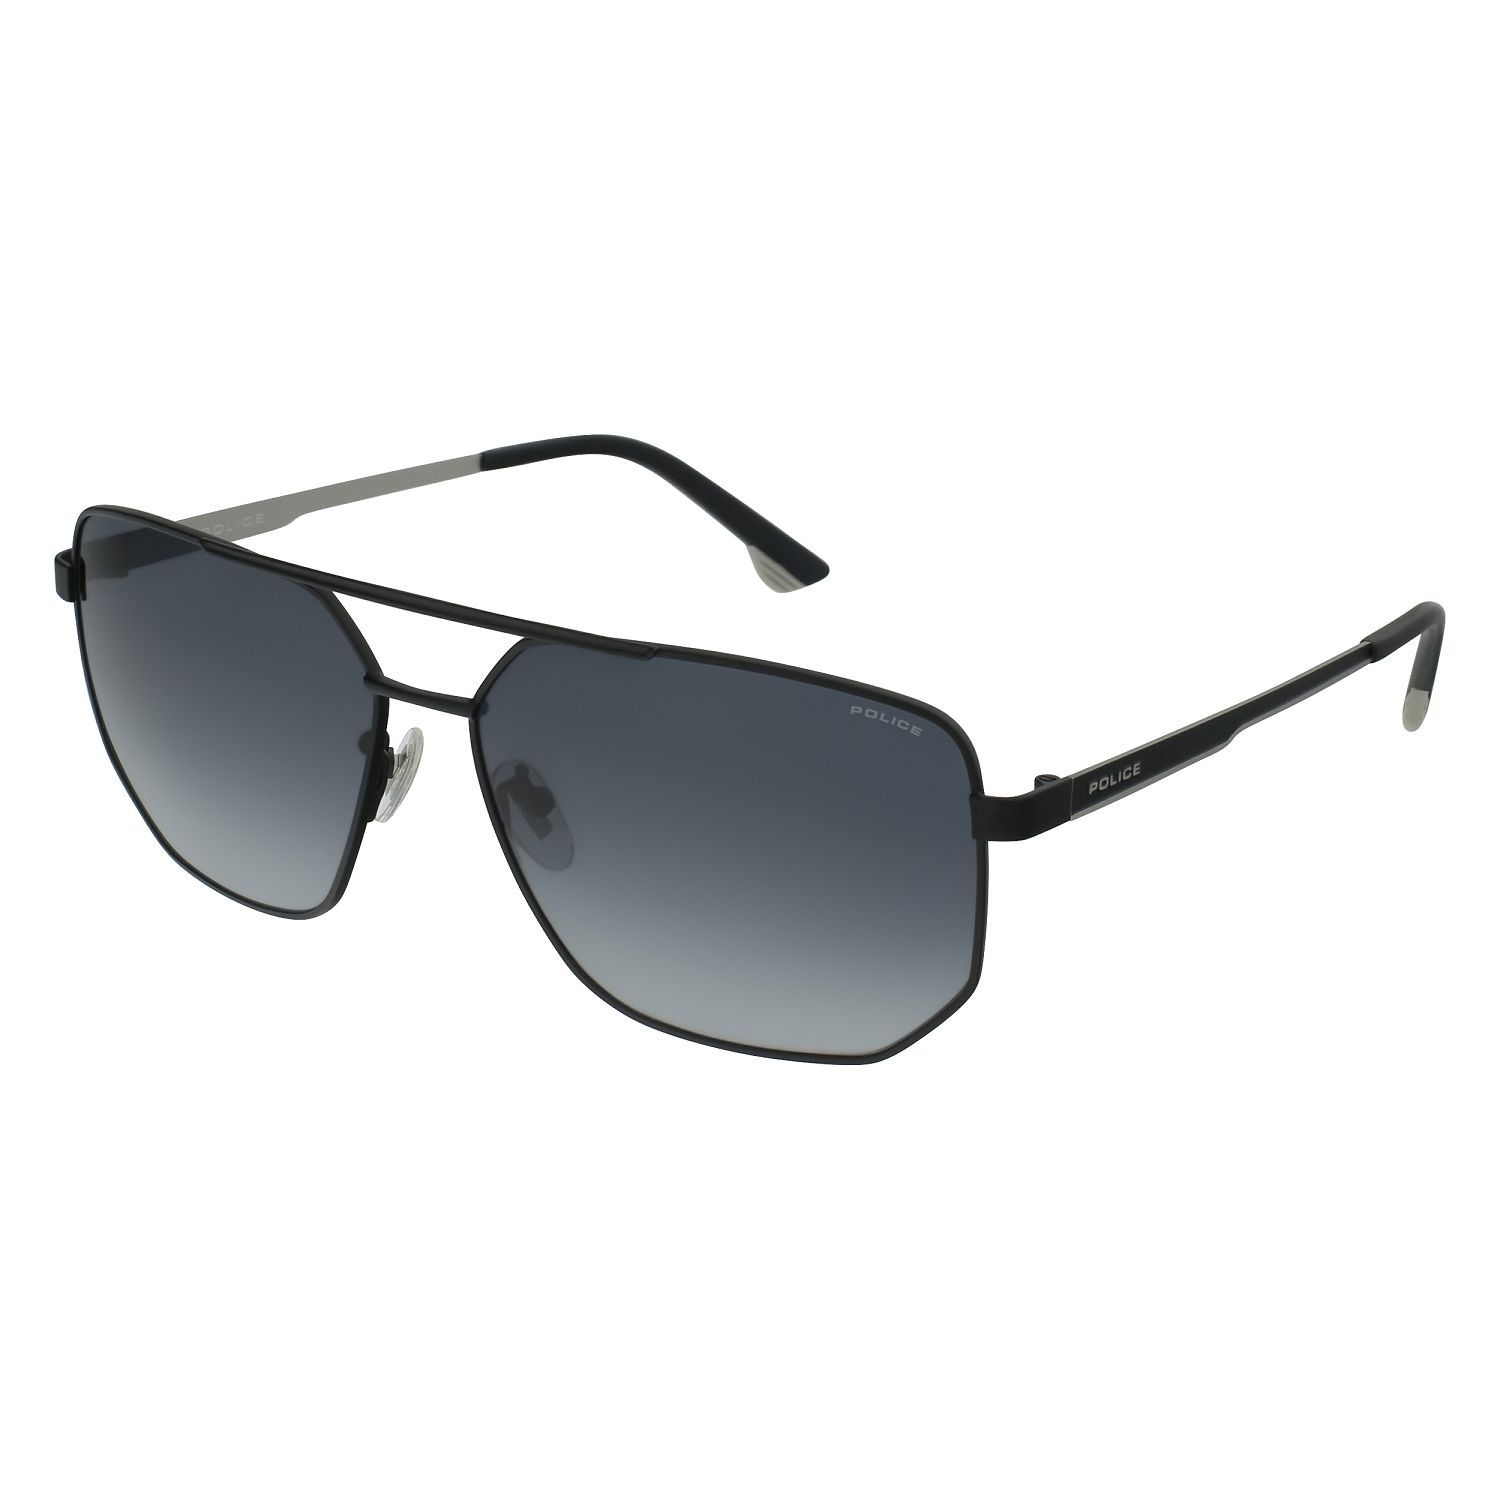 SPLB36M Square Sunglasses 531 - size 61